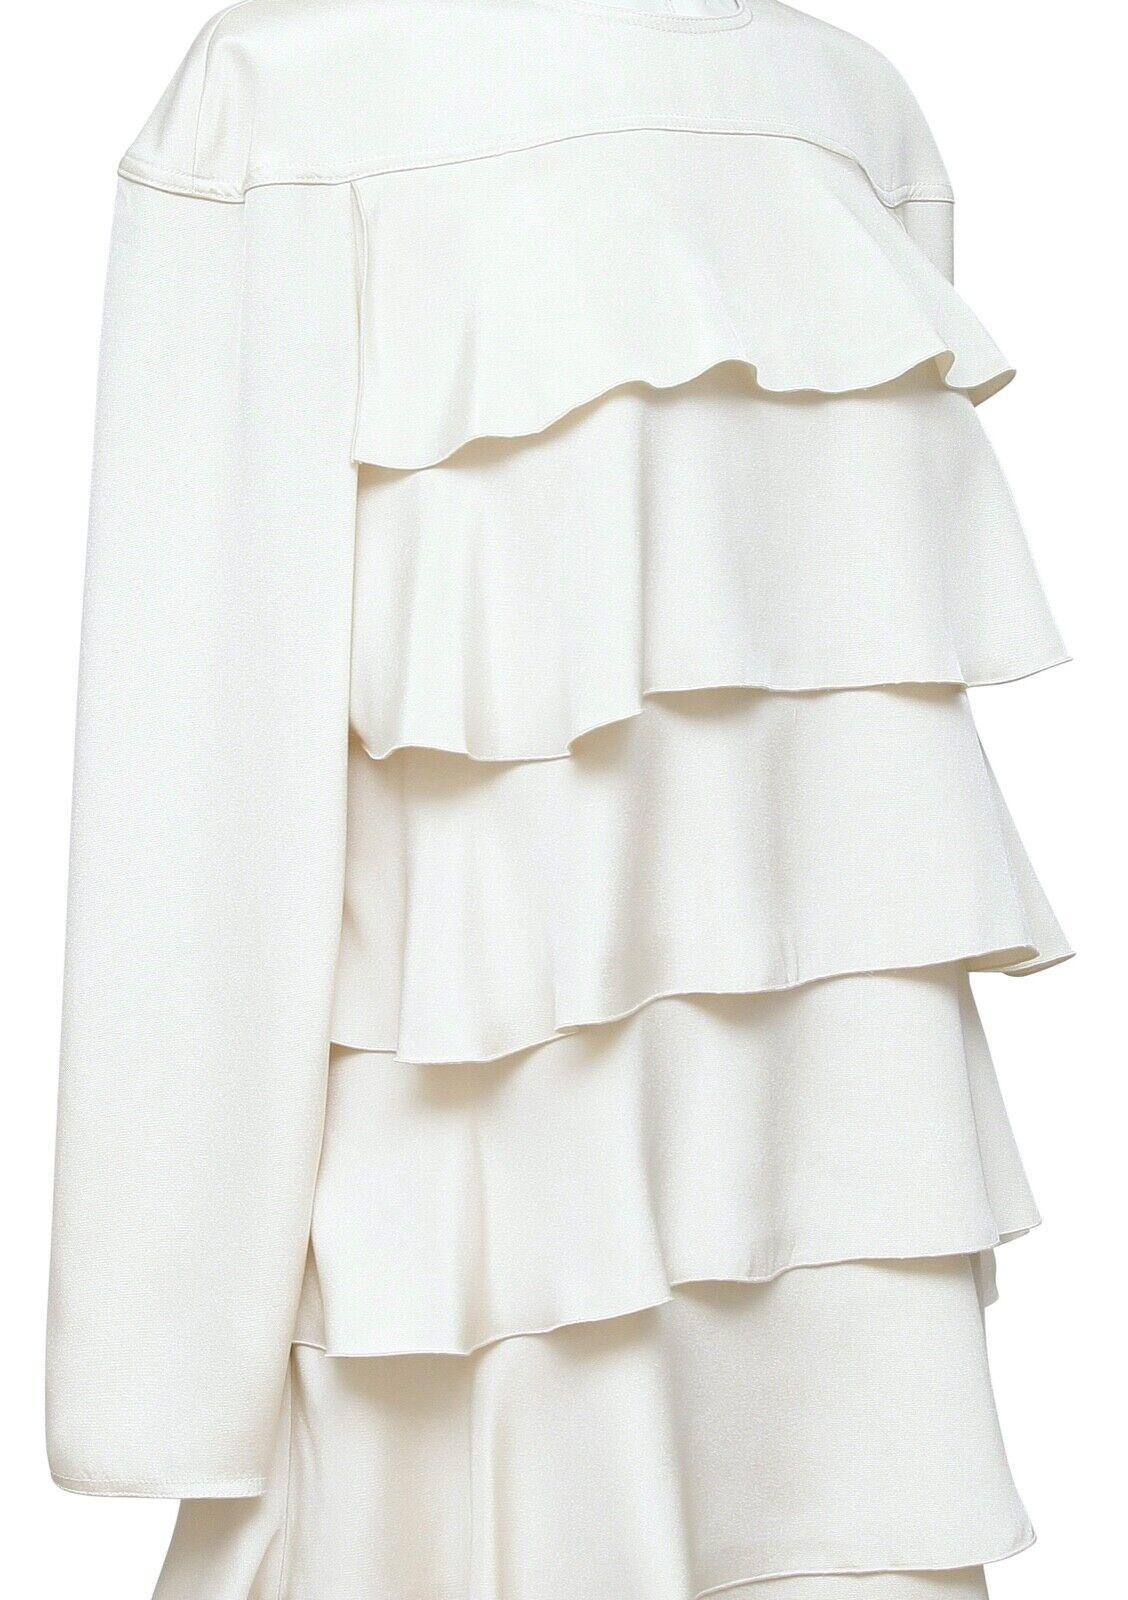 Women's VALENTINO Ivory Dress Long Sleeve Knee Length Silk Tiered Crew Neck Sz 6 For Sale